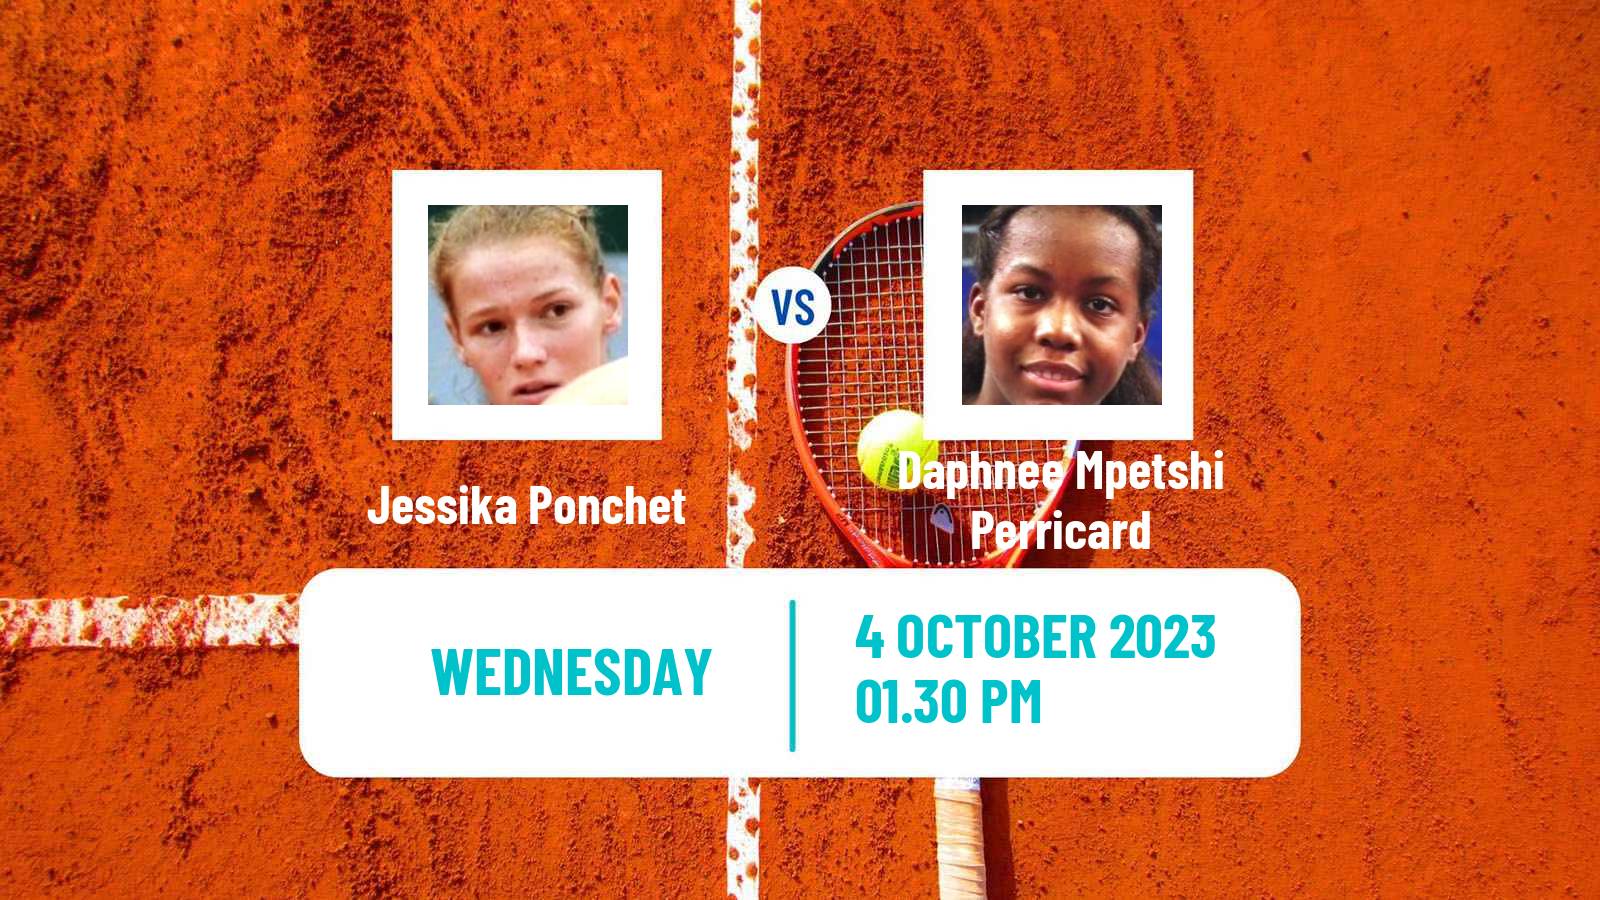 Tennis ITF W25 Reims Women Jessika Ponchet - Daphnee Mpetshi Perricard